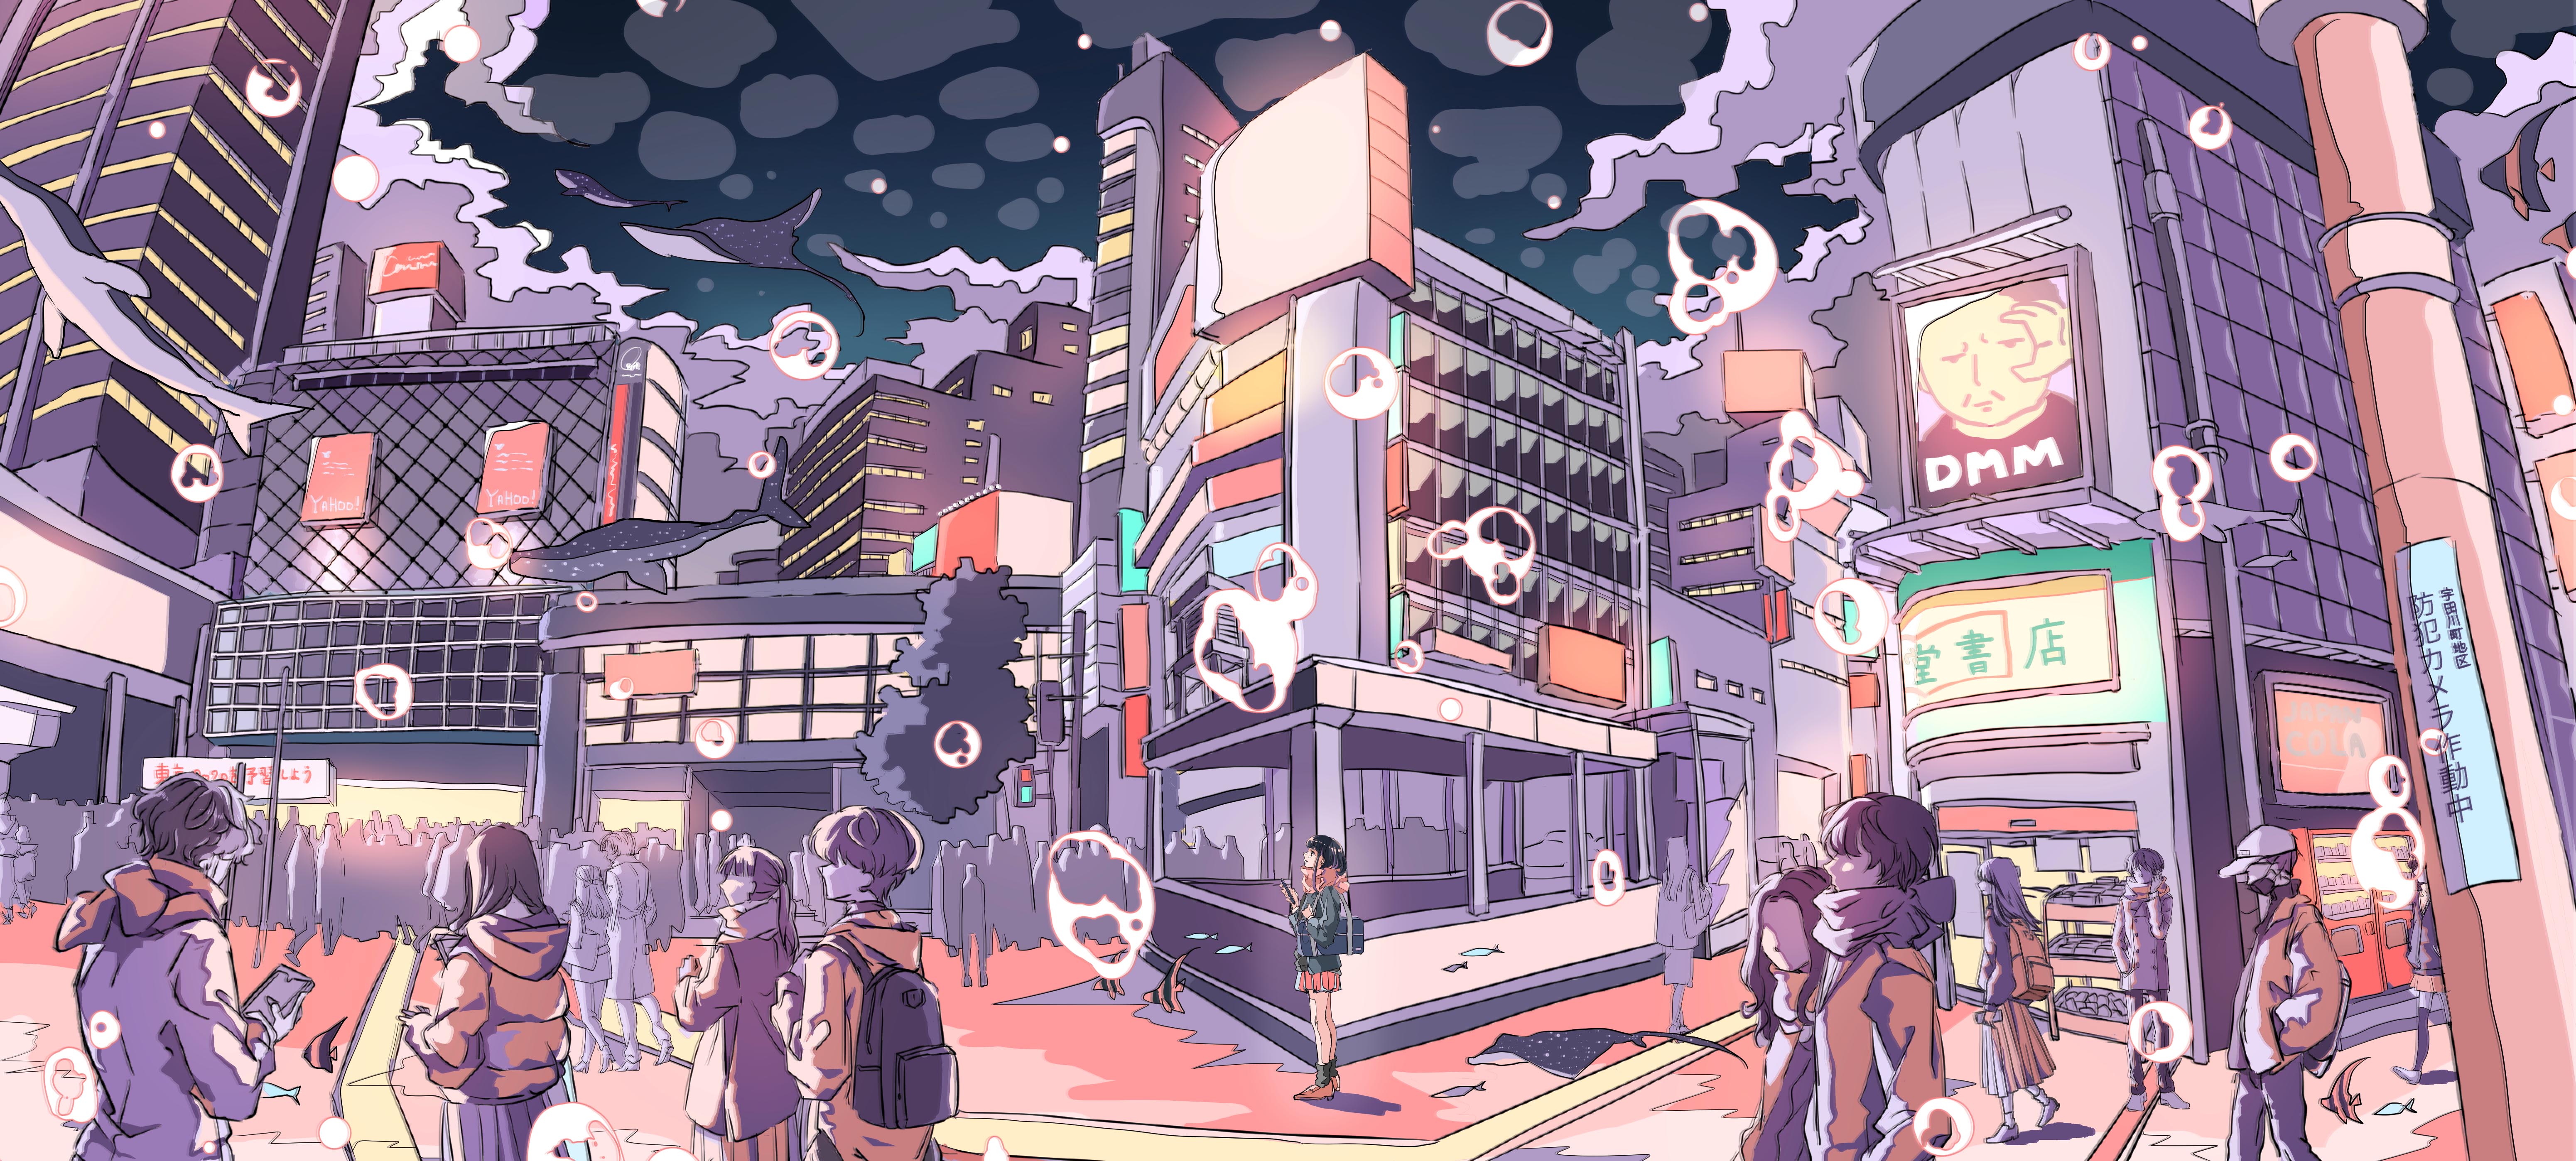 Anime 2D Digital Art Artwork Cityscape Bubbles Manta Rays Whale 6202x2796